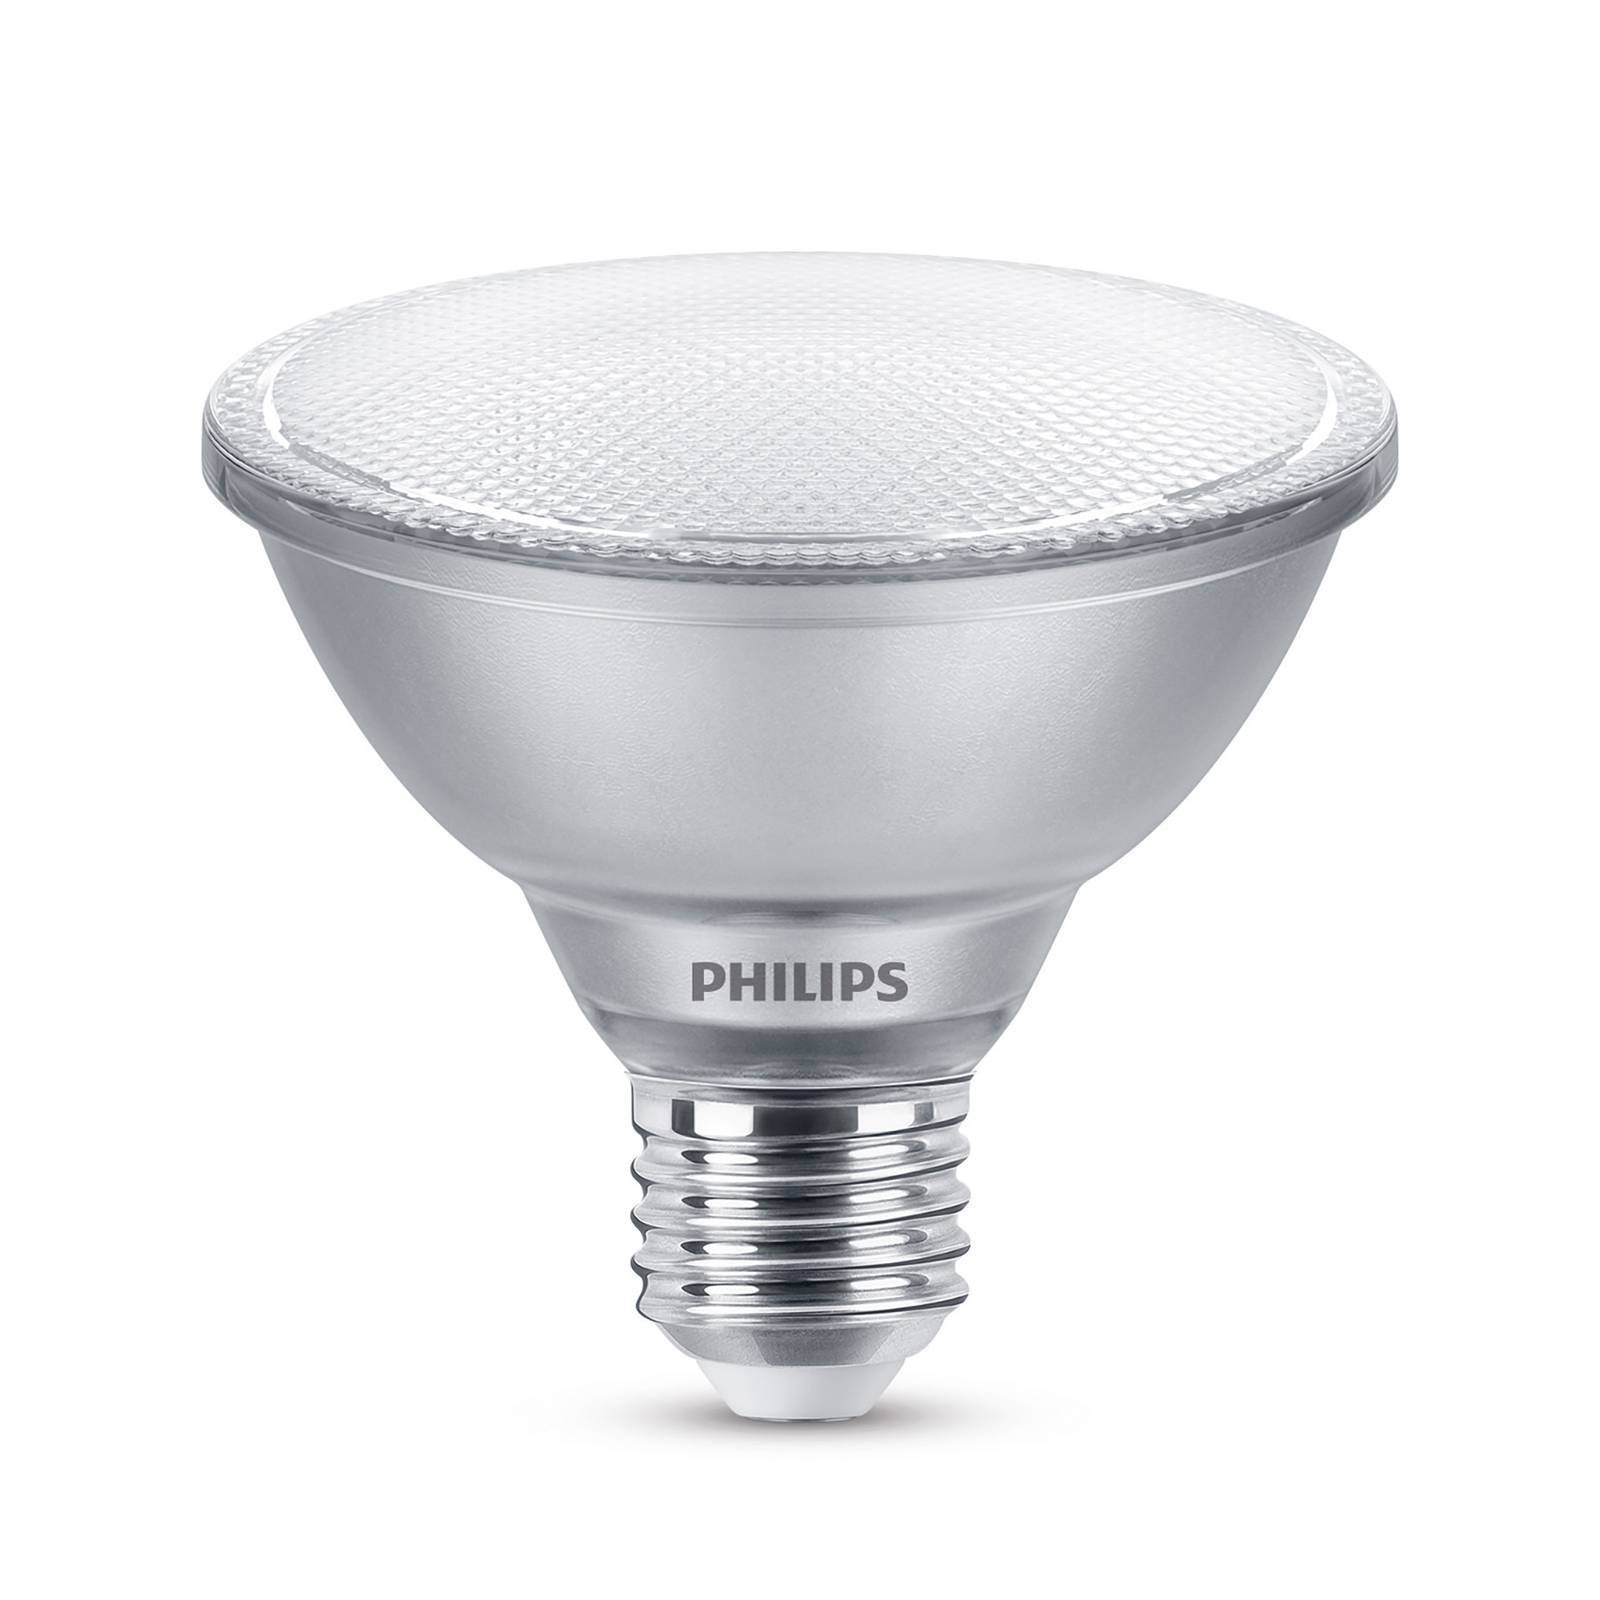 Philips LED-Reflektor PAR30S E27 9,5W, warmweiß, dimmbar